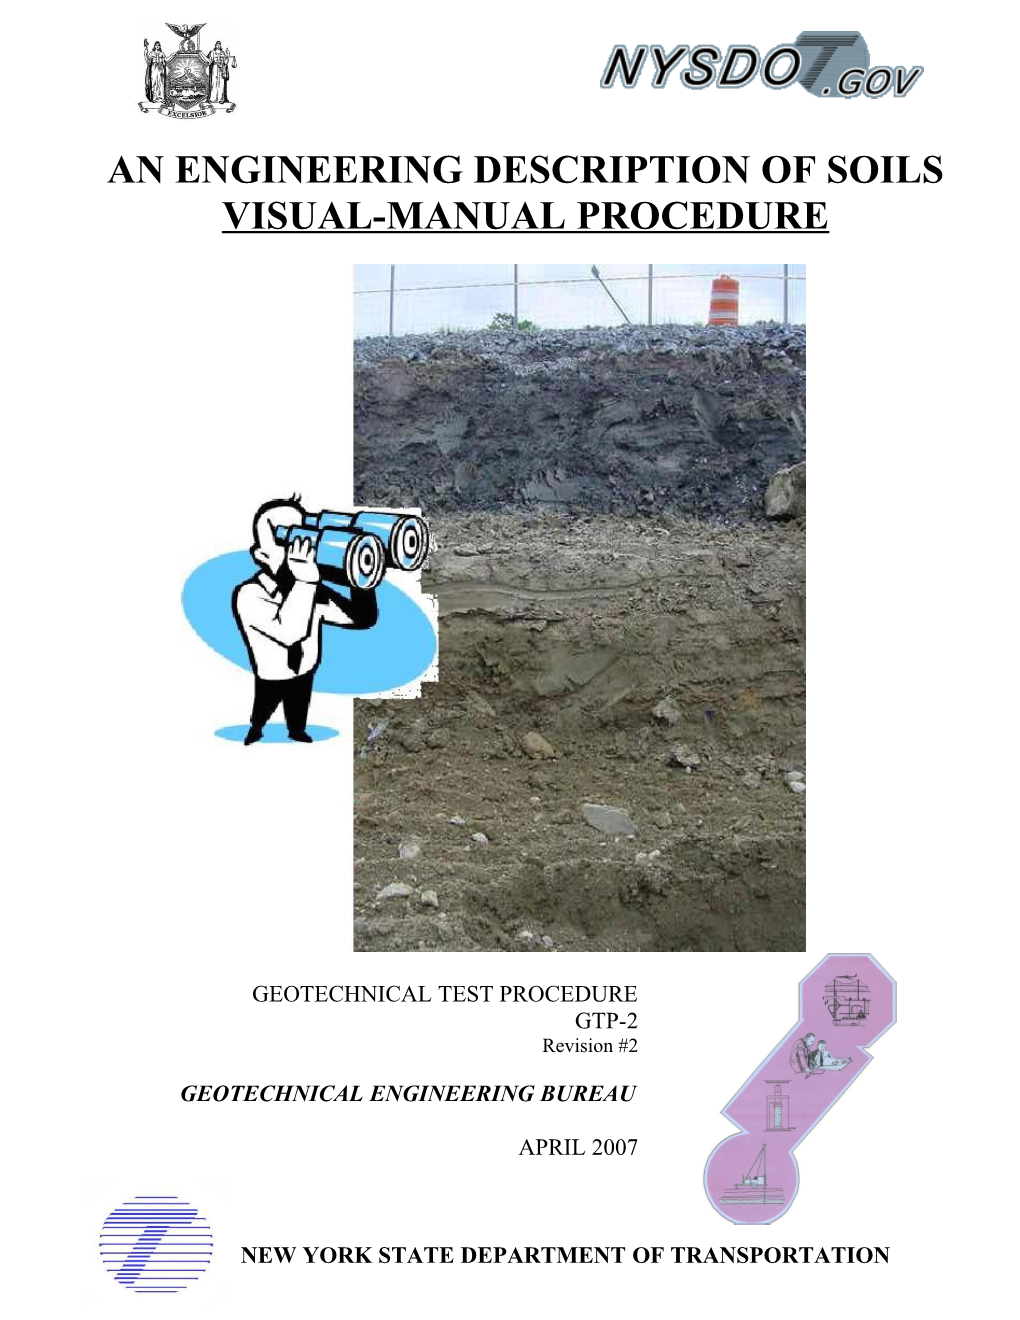 An Engineering Description of Soils Visual-Manual Procedure